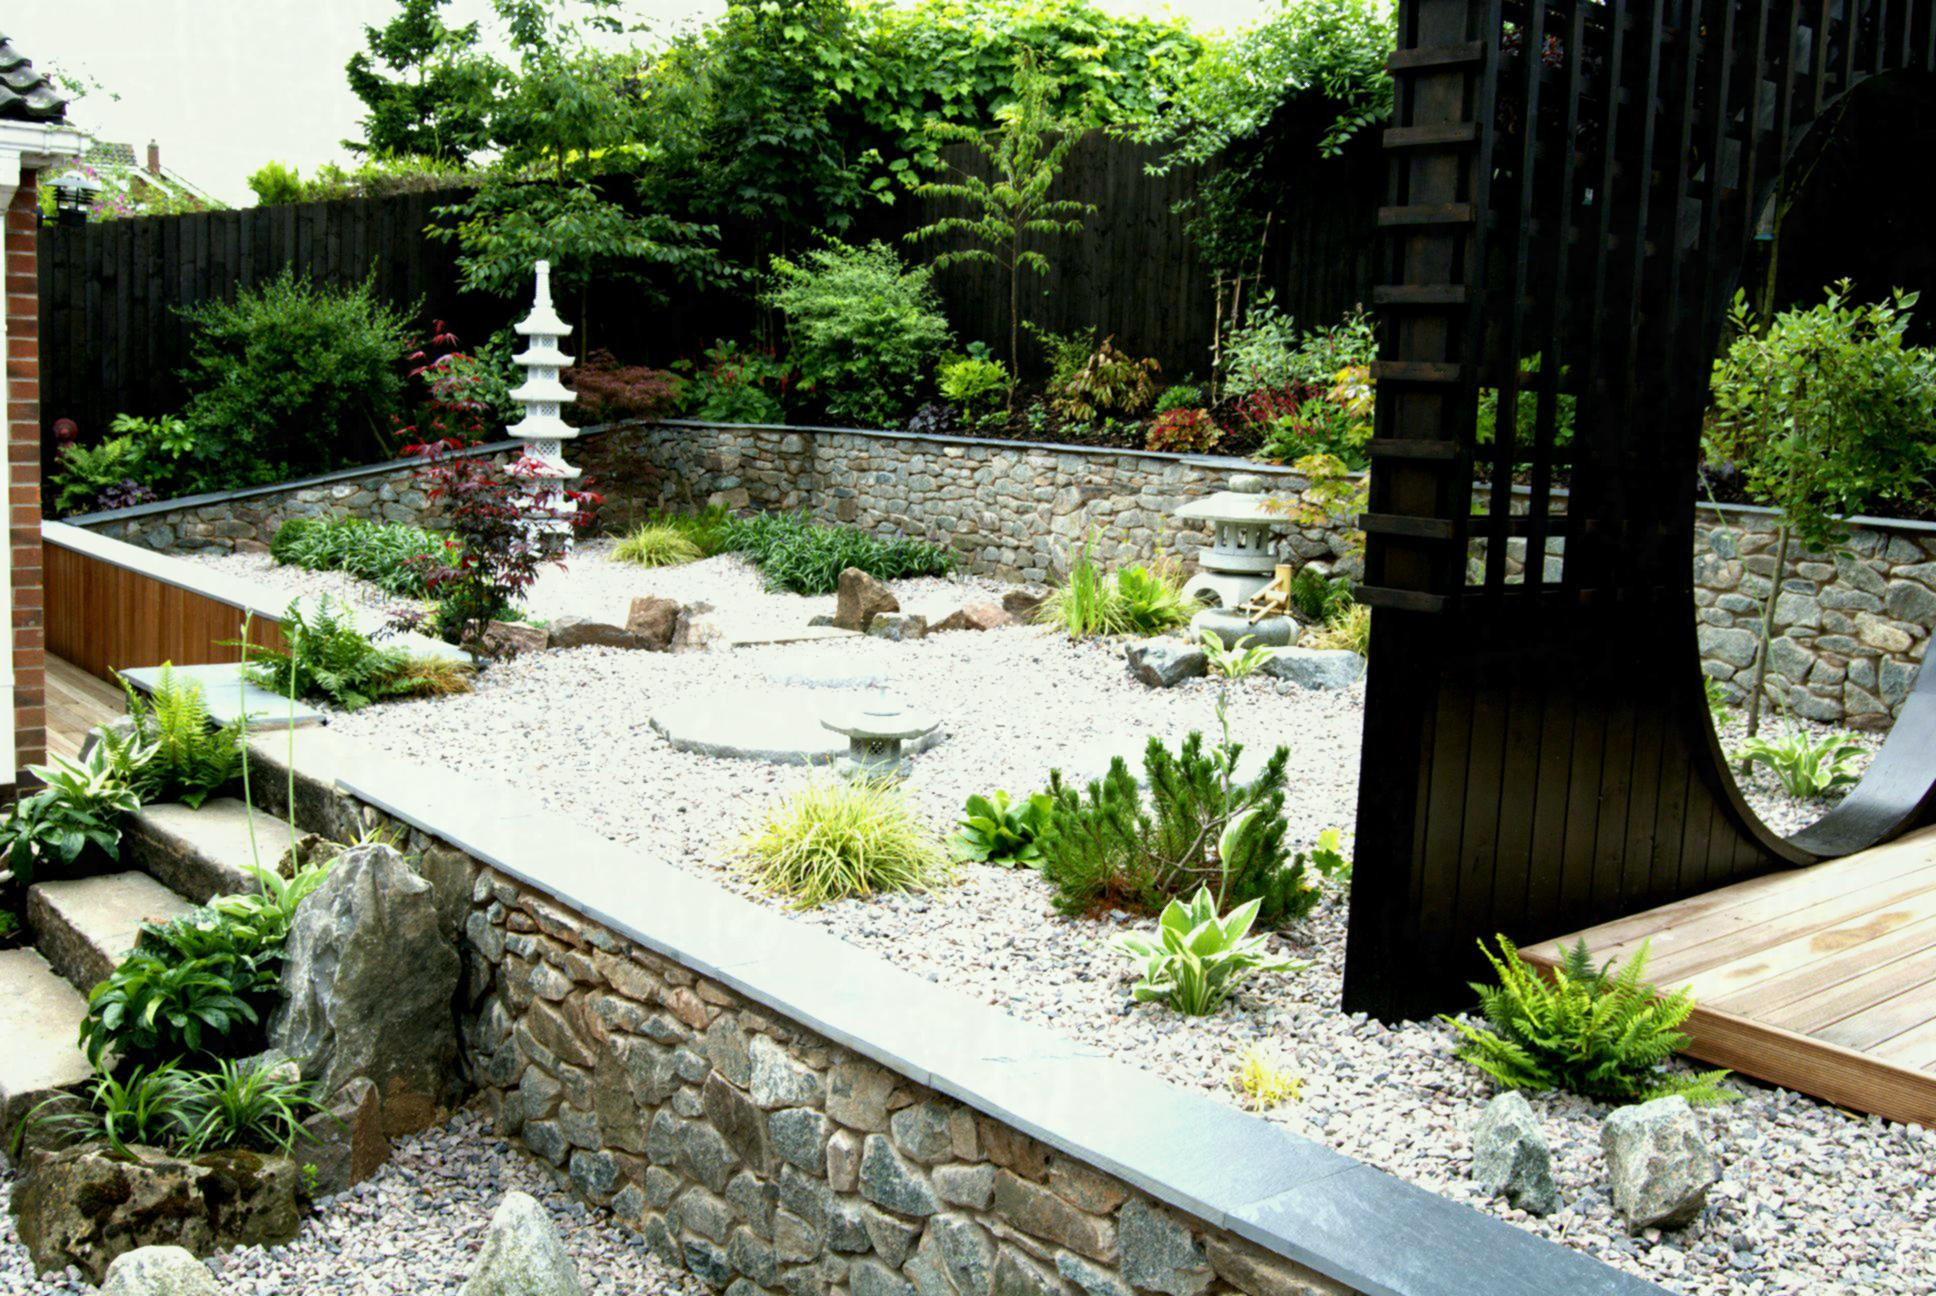 Best ideas about Garden Ideas For Small Spaces
. Save or Pin River Rock Garden Ideas Small Space Home Garden Ideas Now.